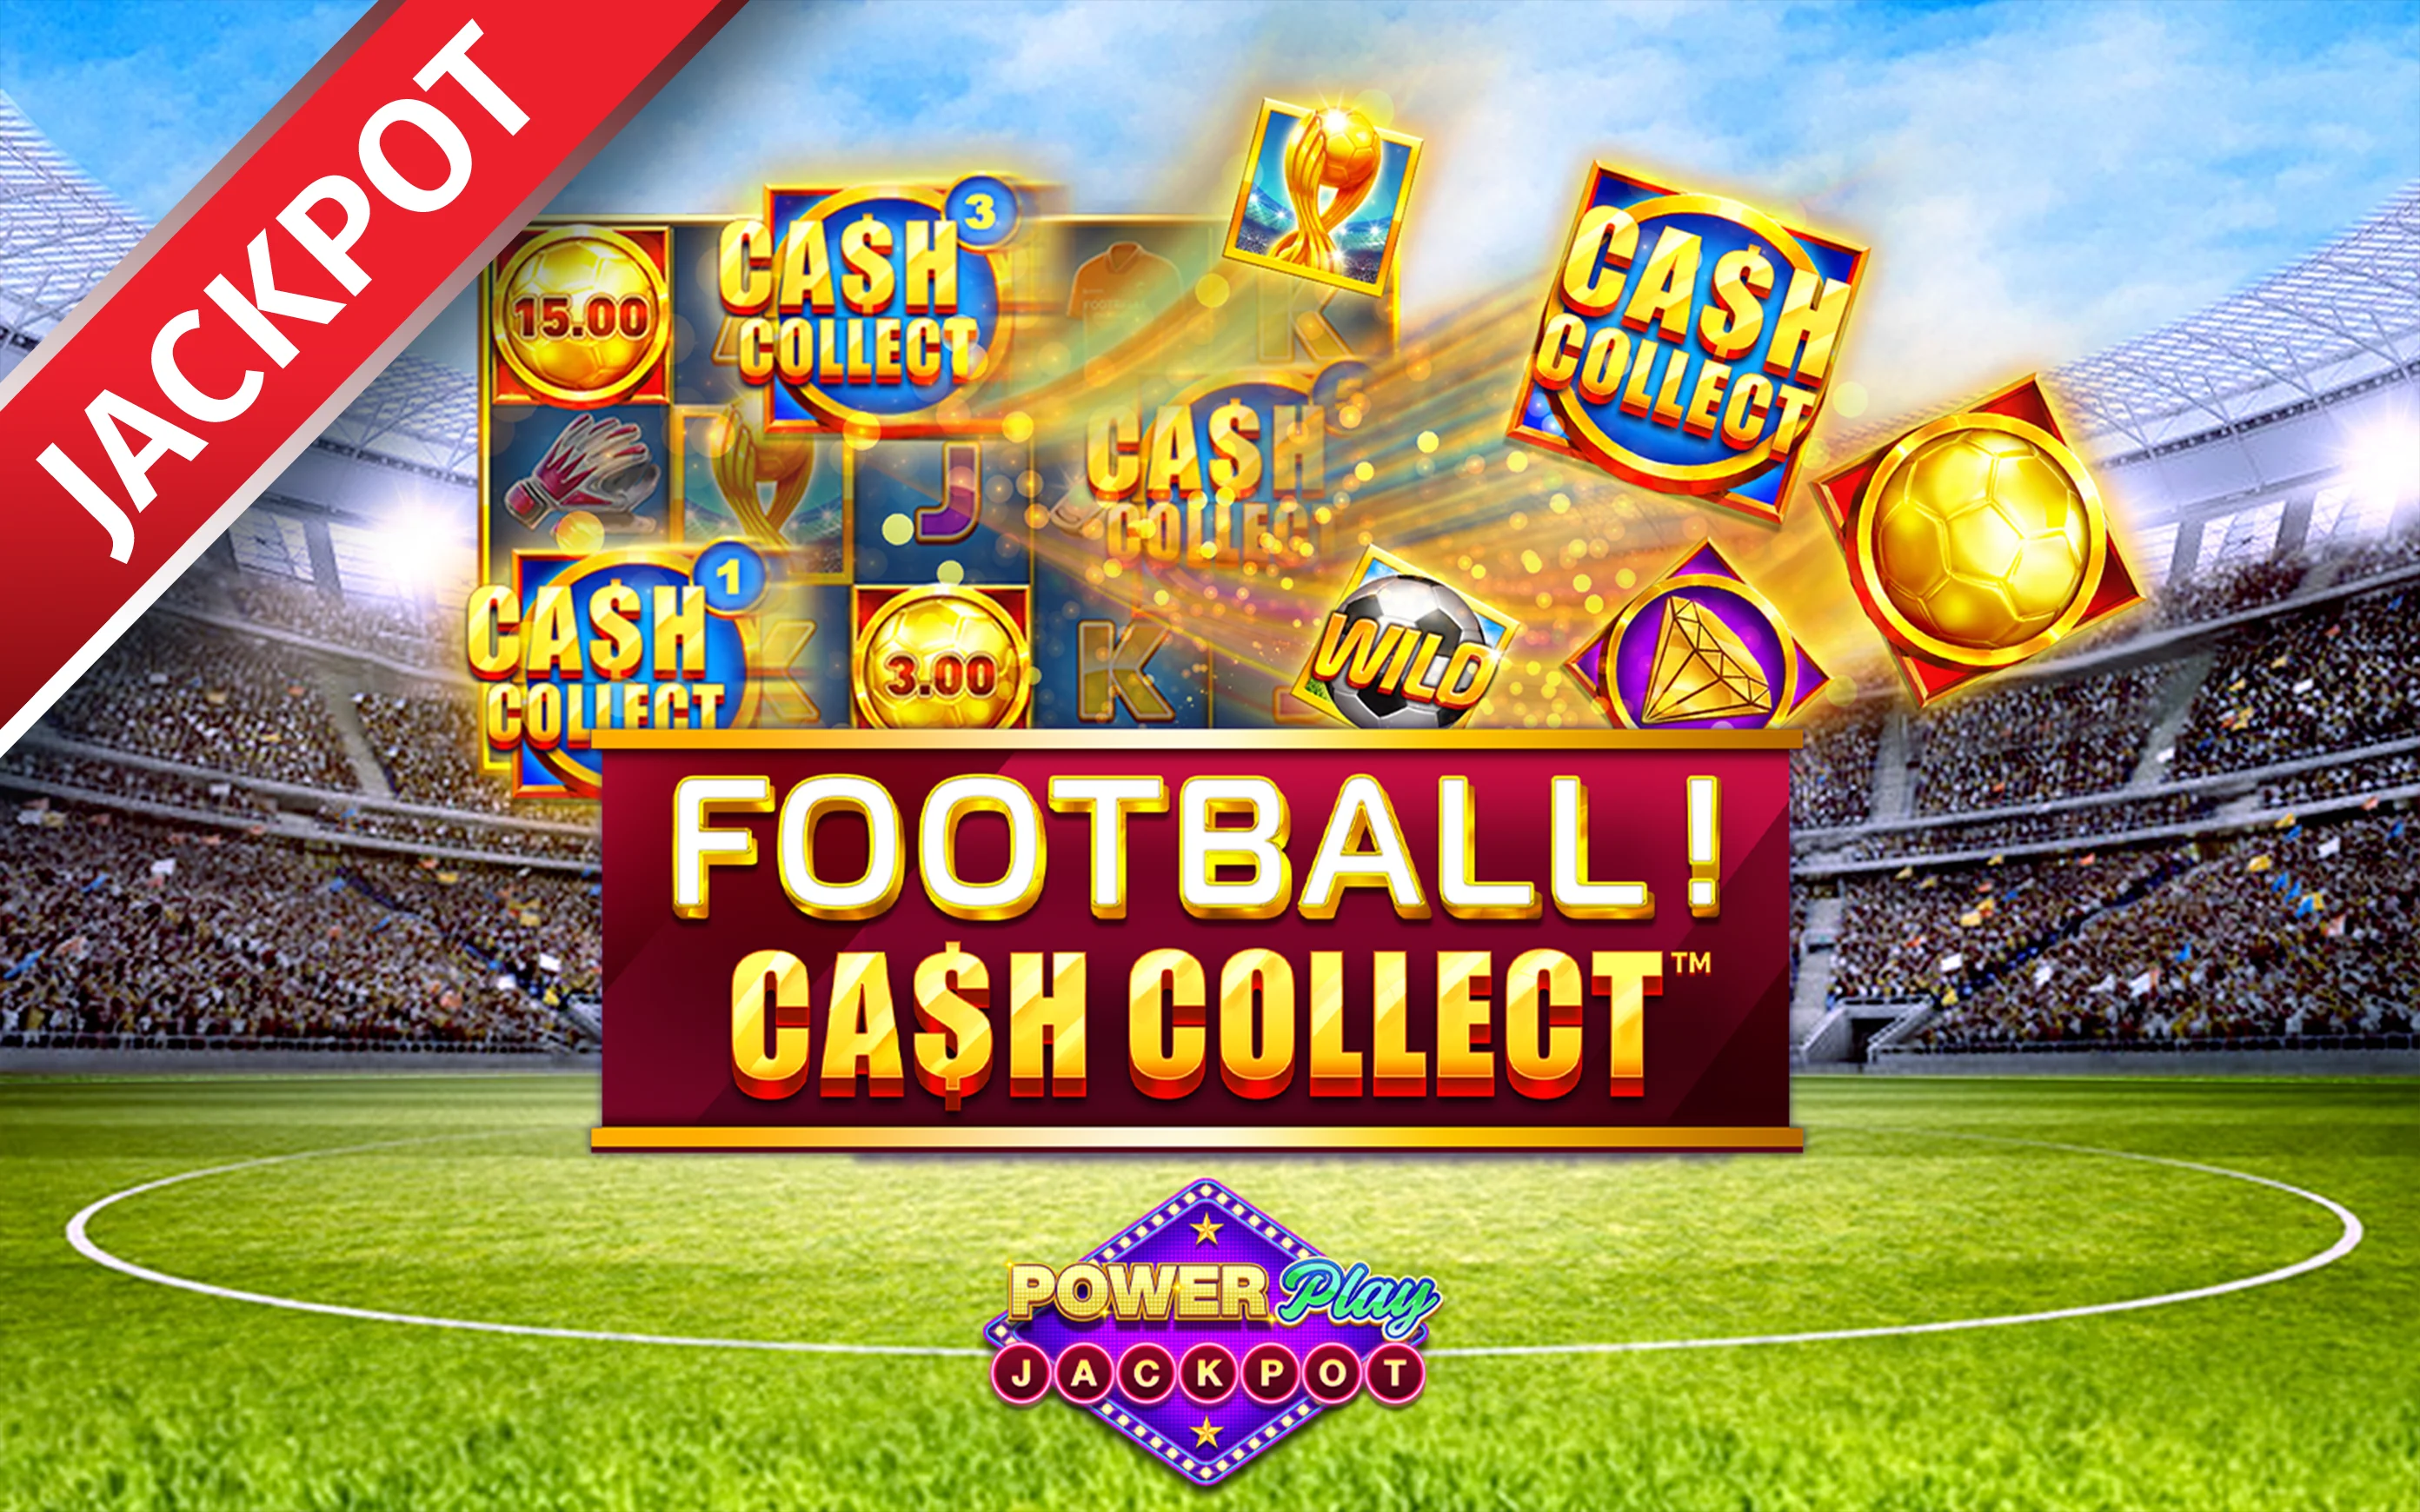 Jogue Football! Cash Collect™ PowerPlay Jackpot no casino online Starcasino.be 